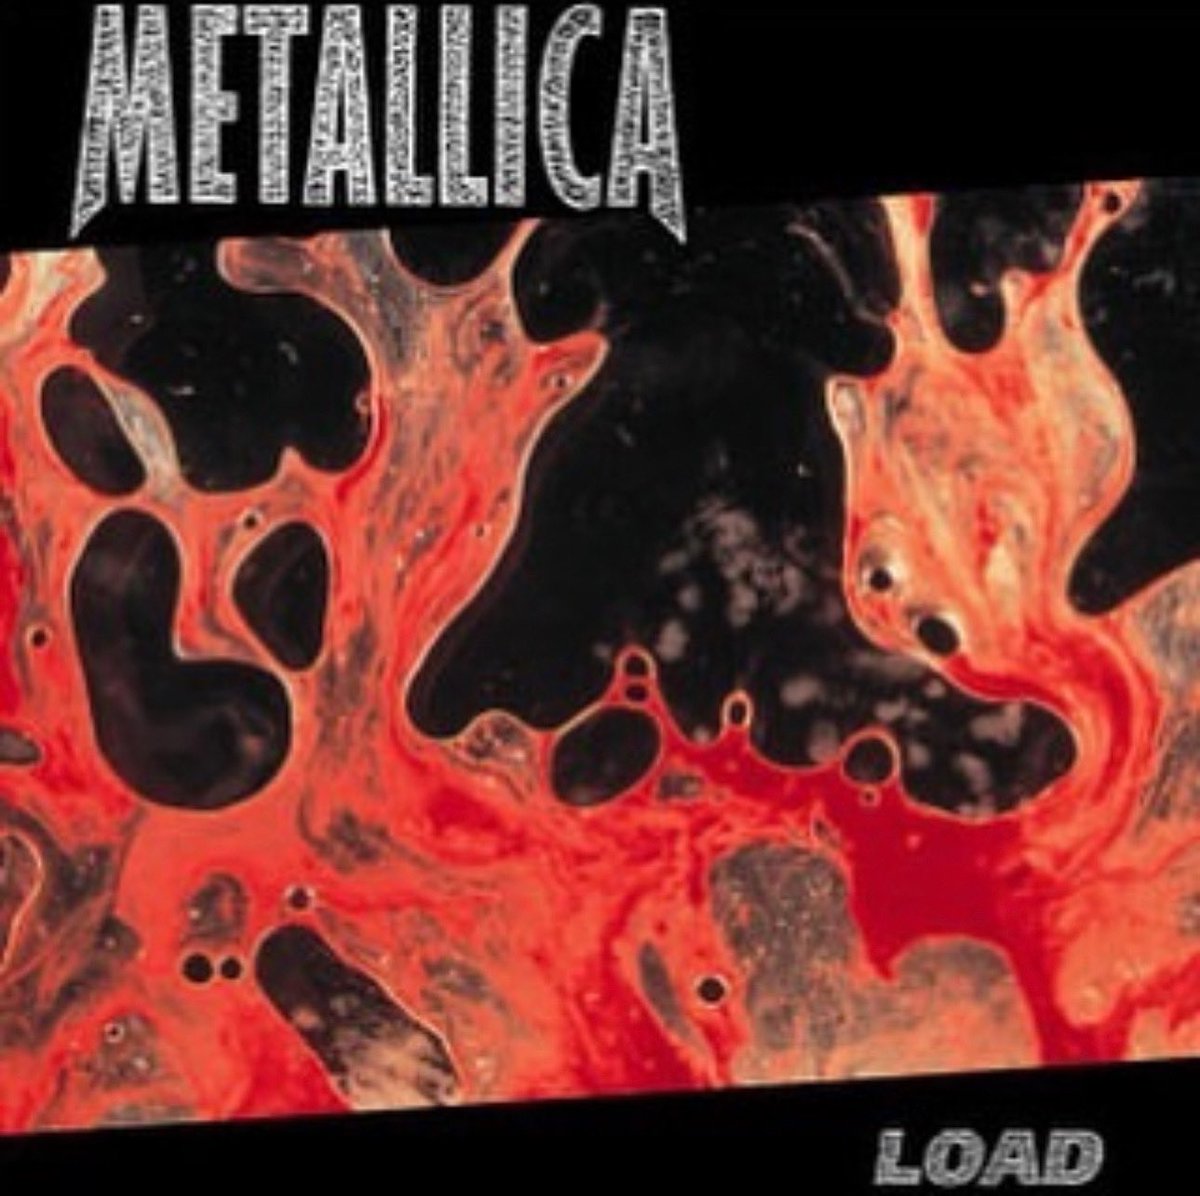 27 years ago today, @Metallica released their 6th album Load under @ElektraRecords instagram.com/p/CtE72lzLTEG/